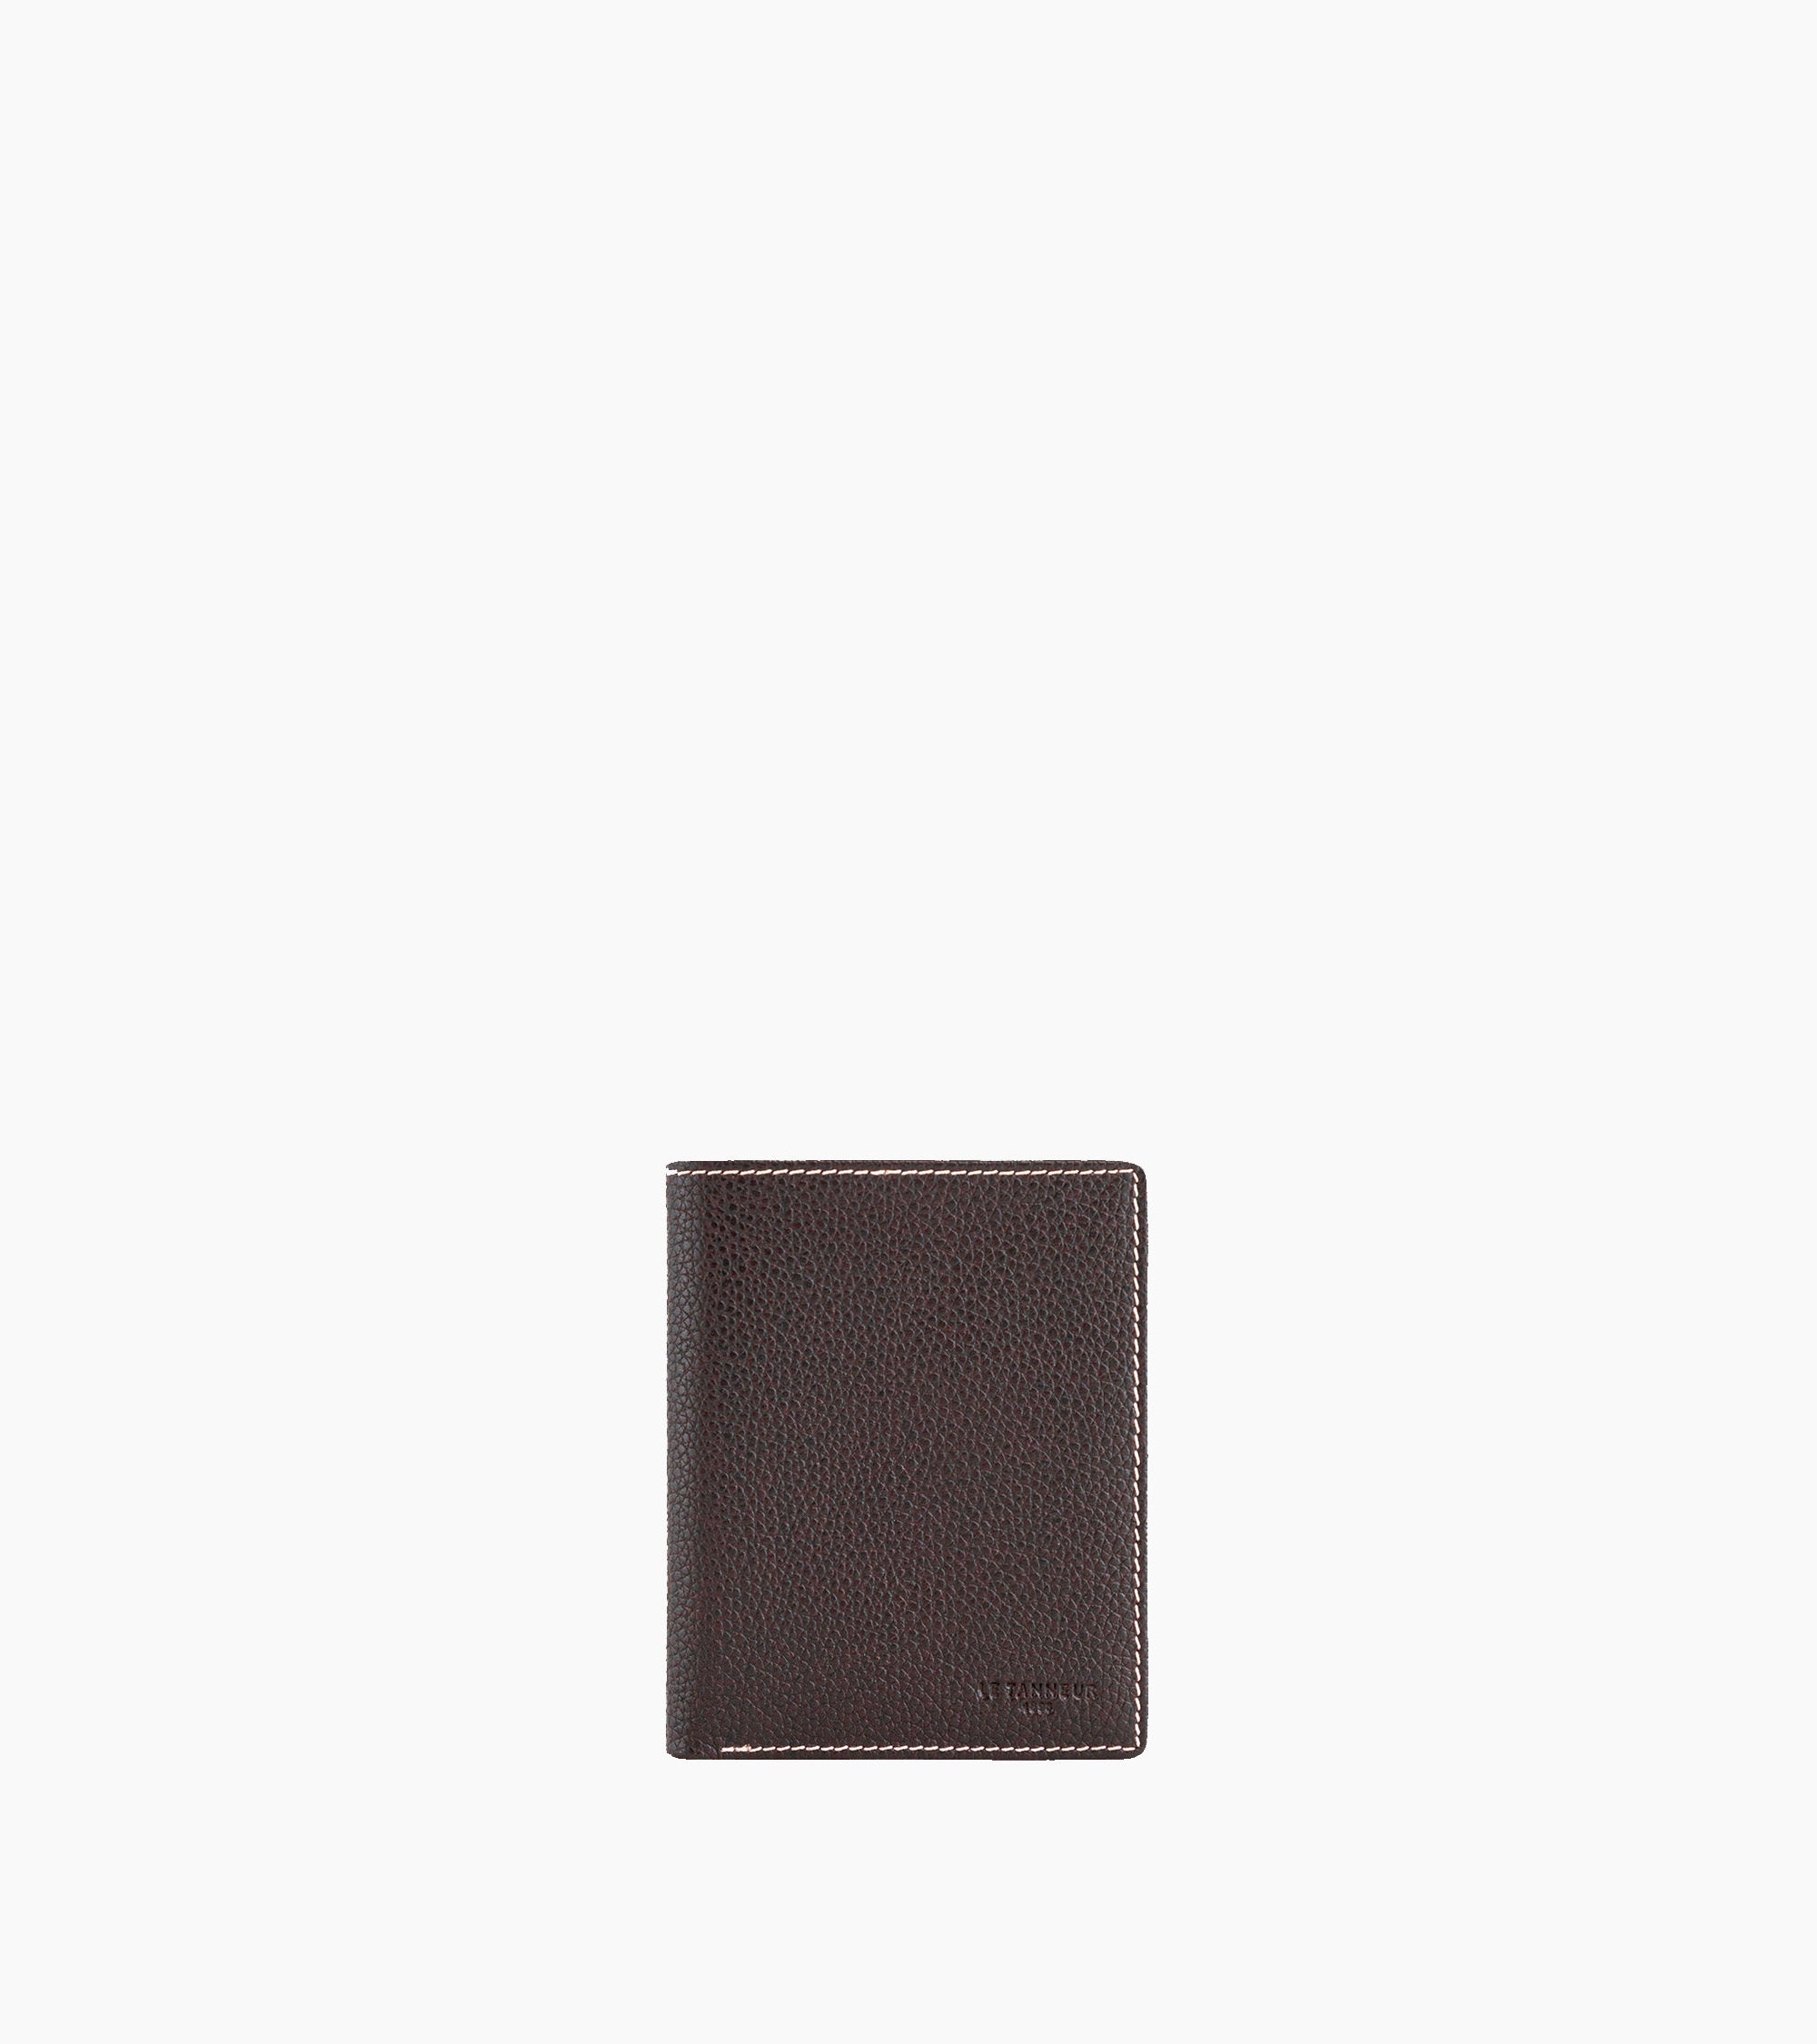 Charles pebbled leather card holder